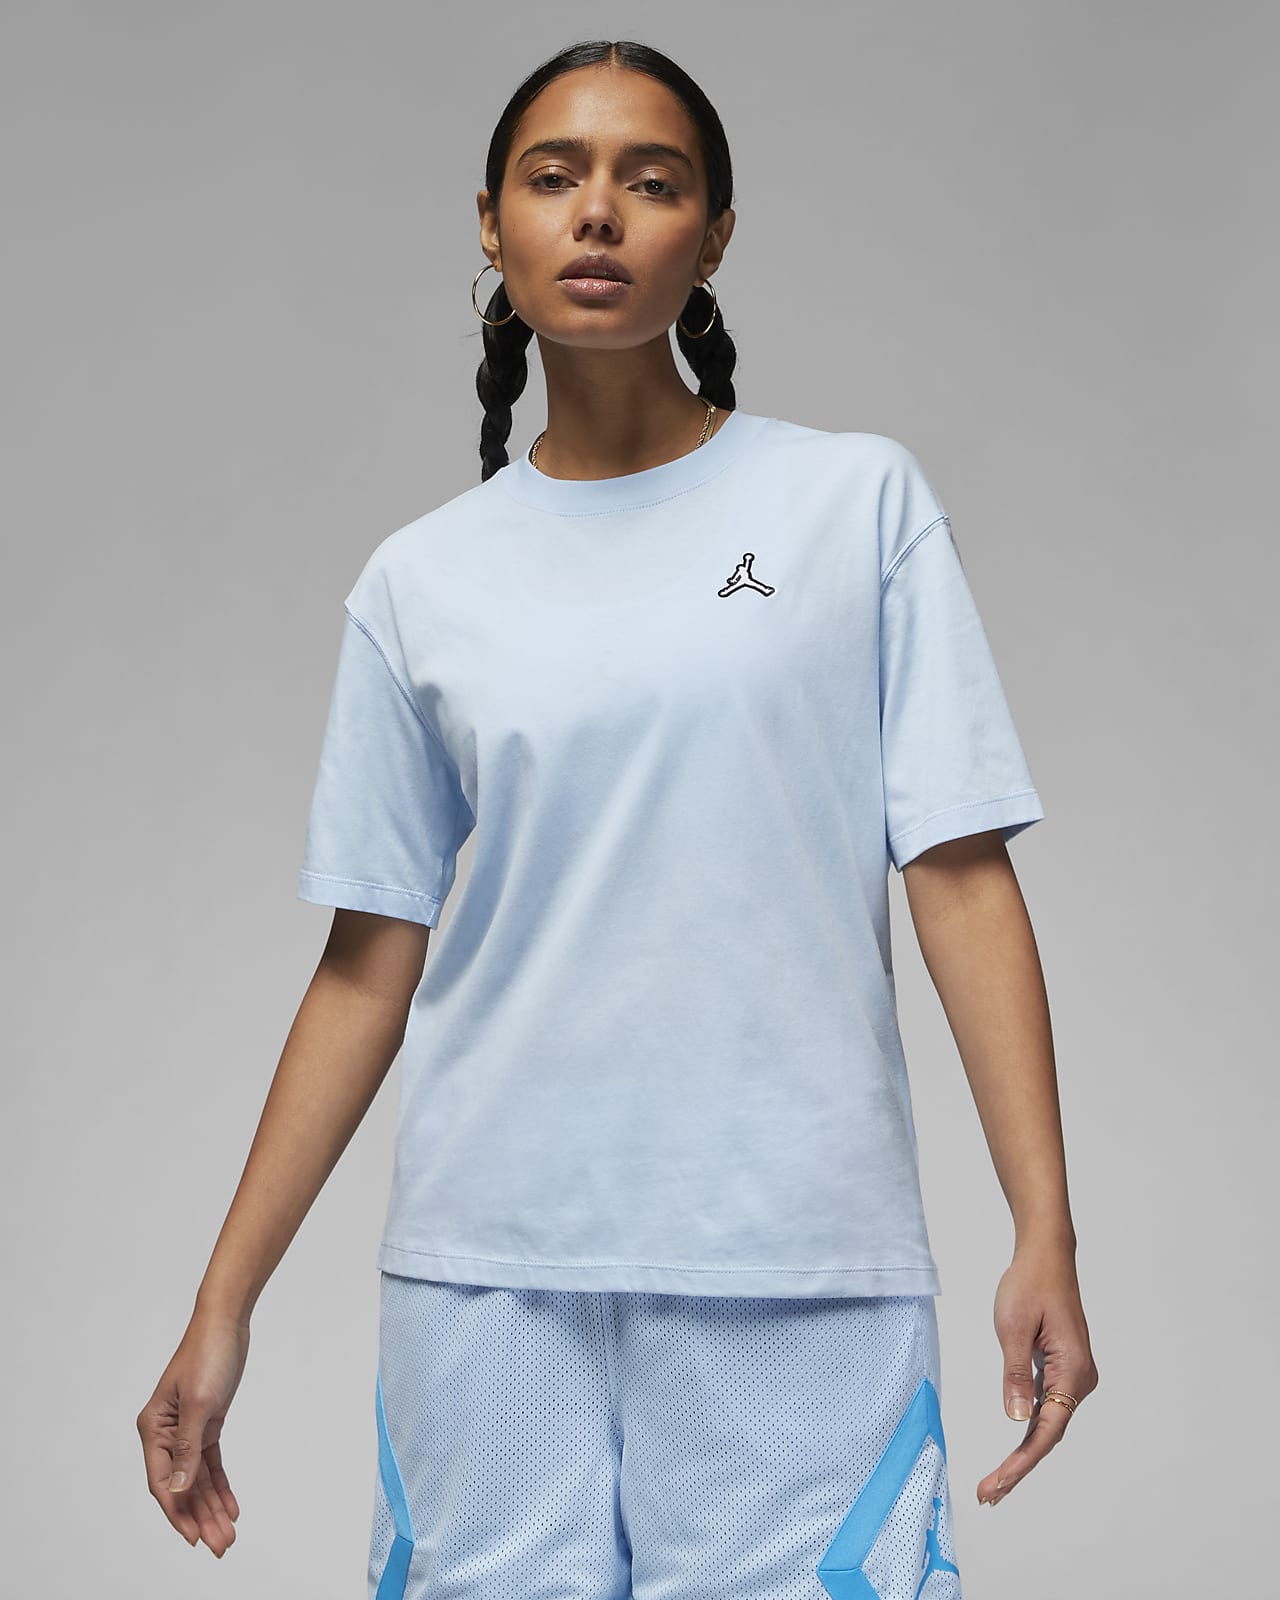 Mentalmente pasta Críticamente Jordan Essentials Camiseta - Mujer. Nike ES